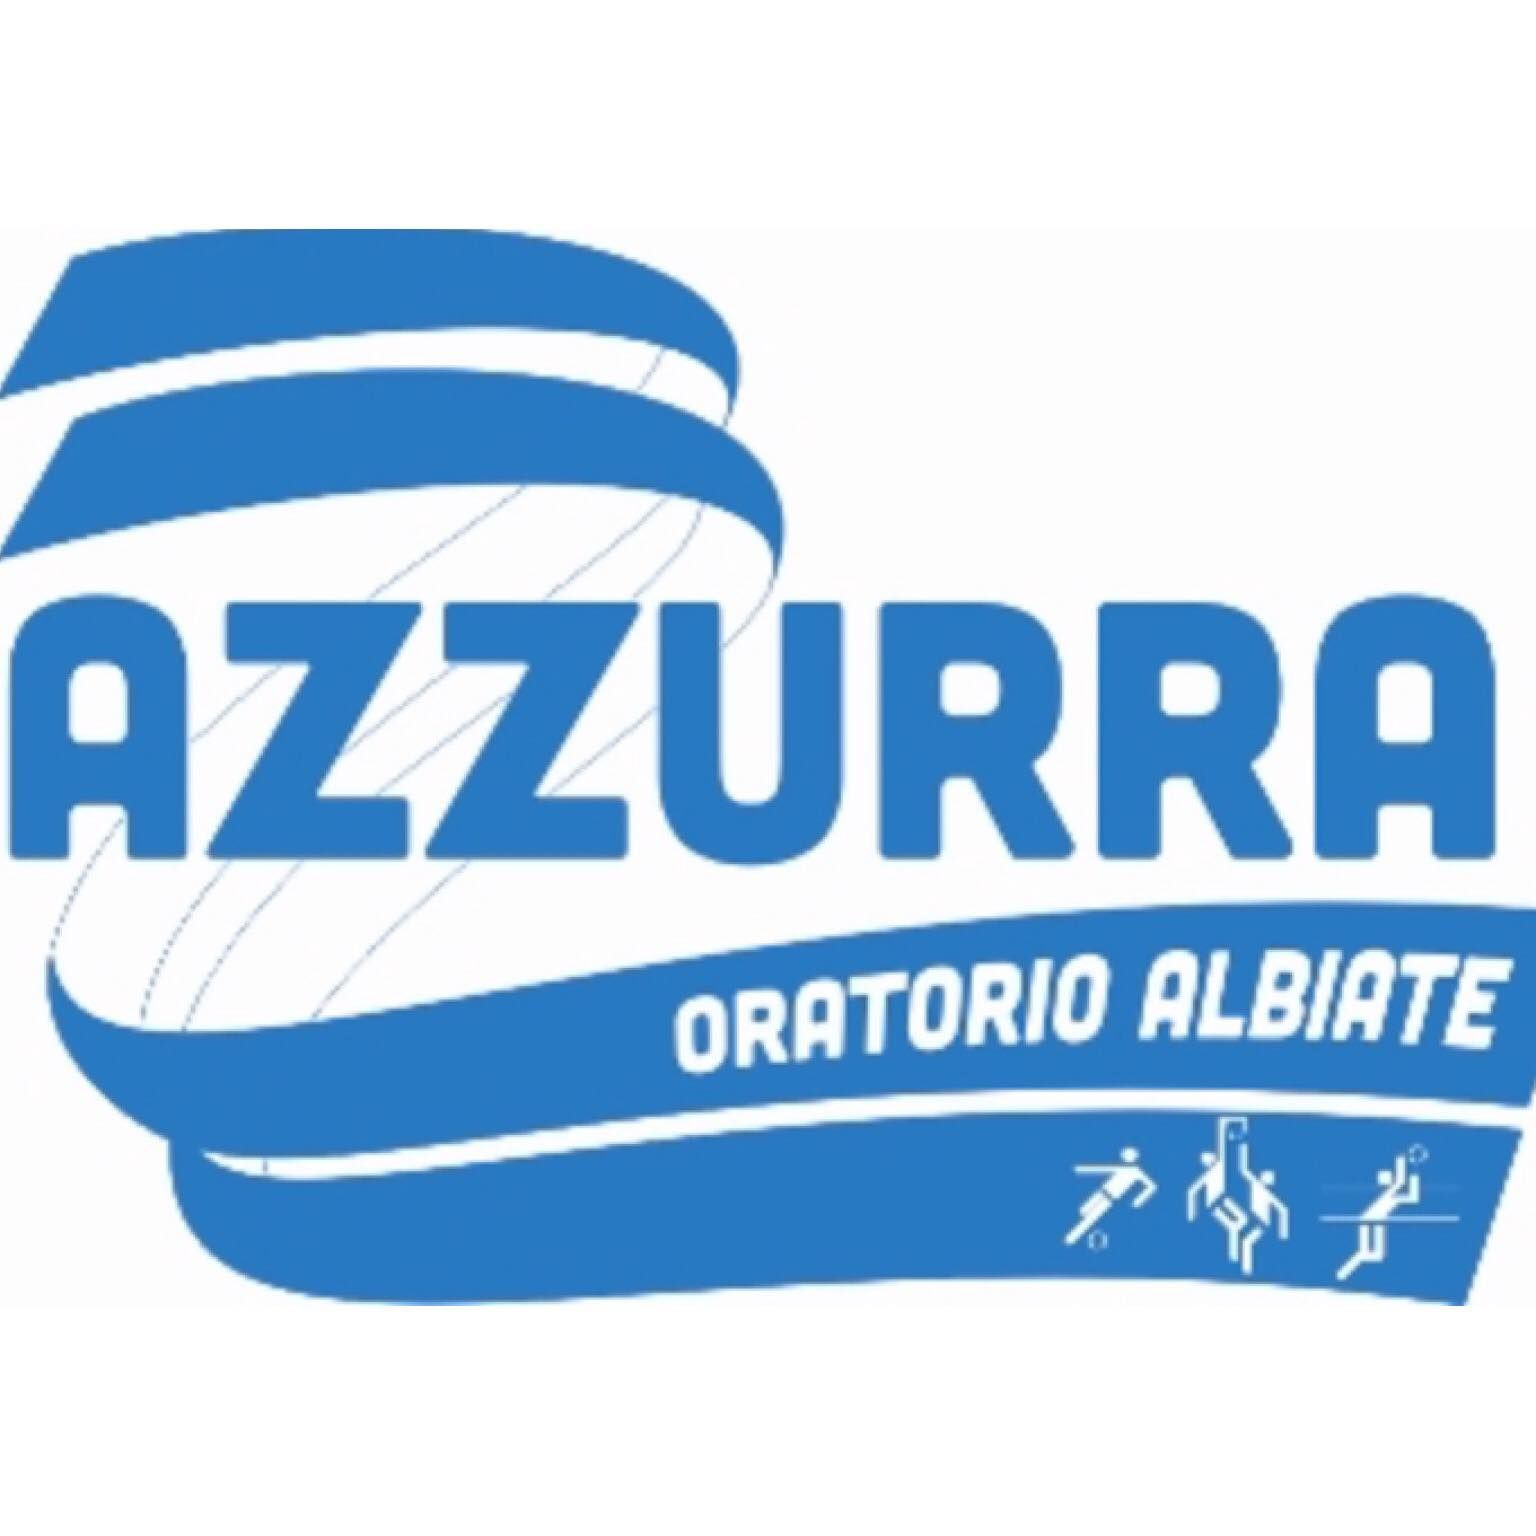 AZZURRA ORATORIO ALBIATE